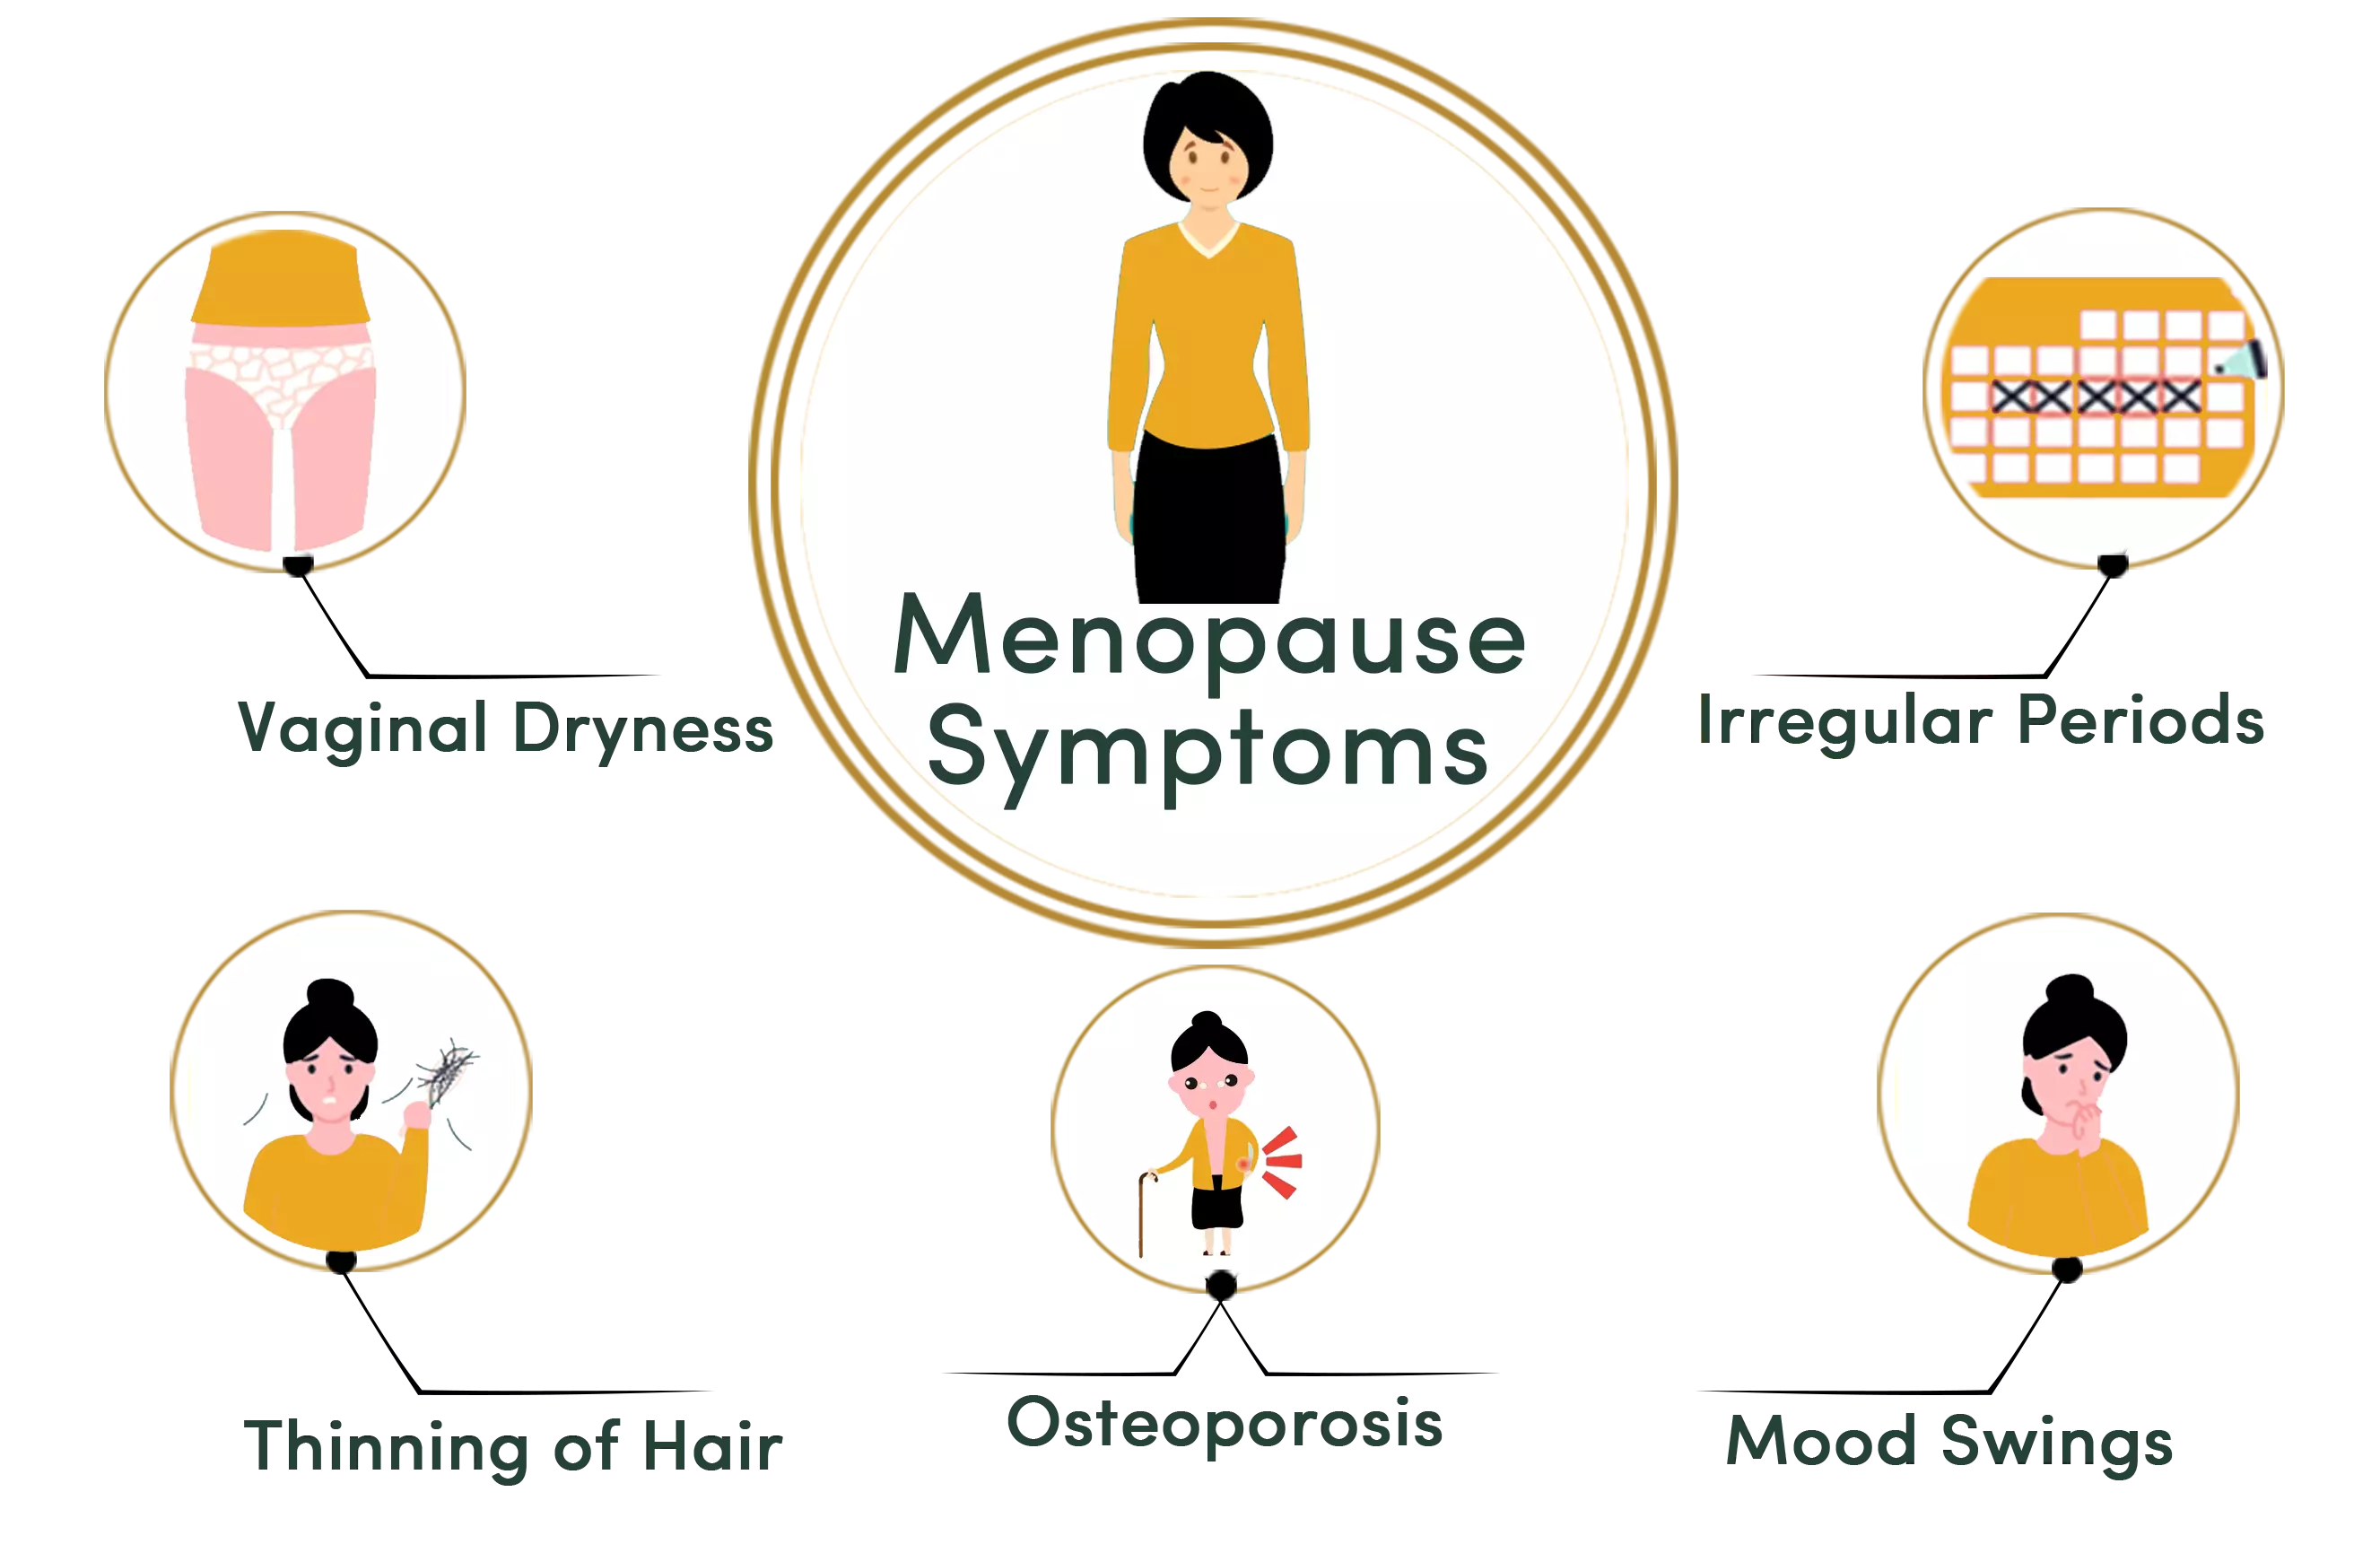 Menopause symptoms